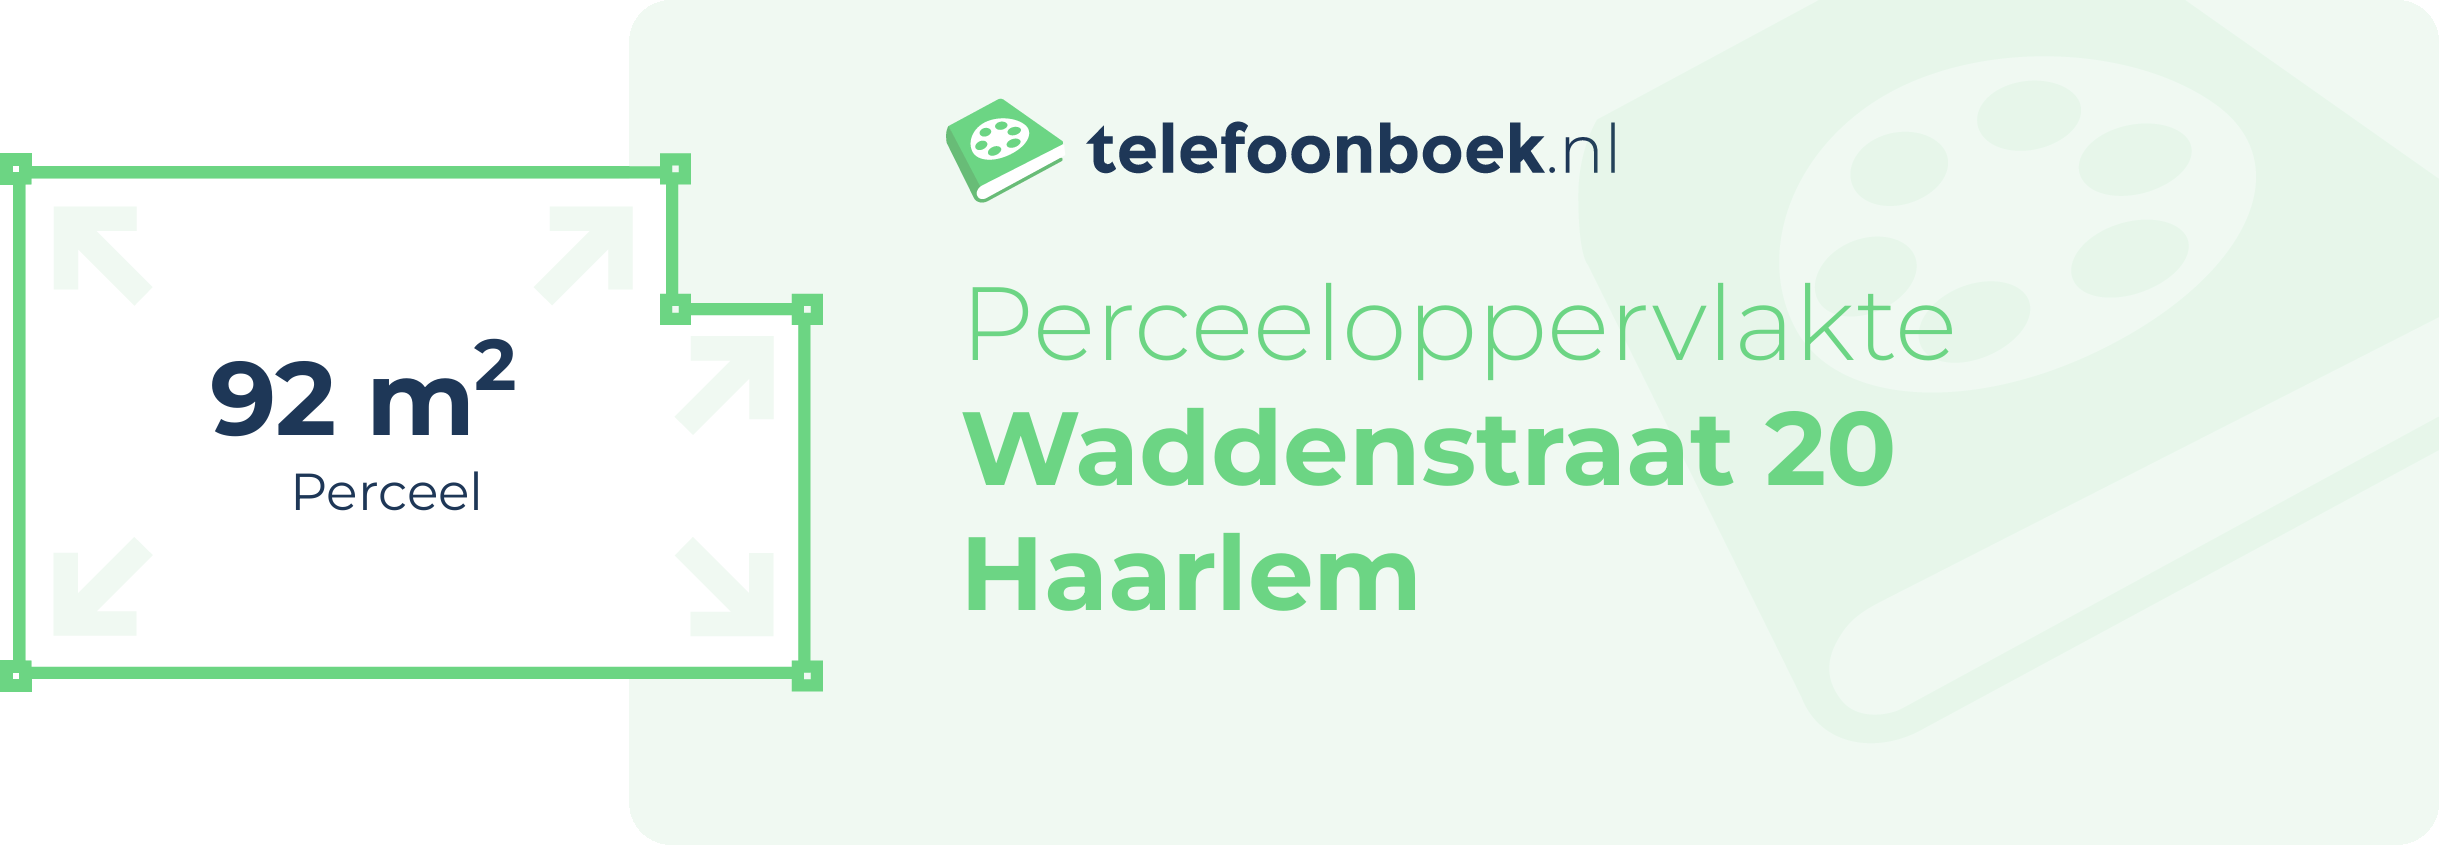 Perceeloppervlakte Waddenstraat 20 Haarlem